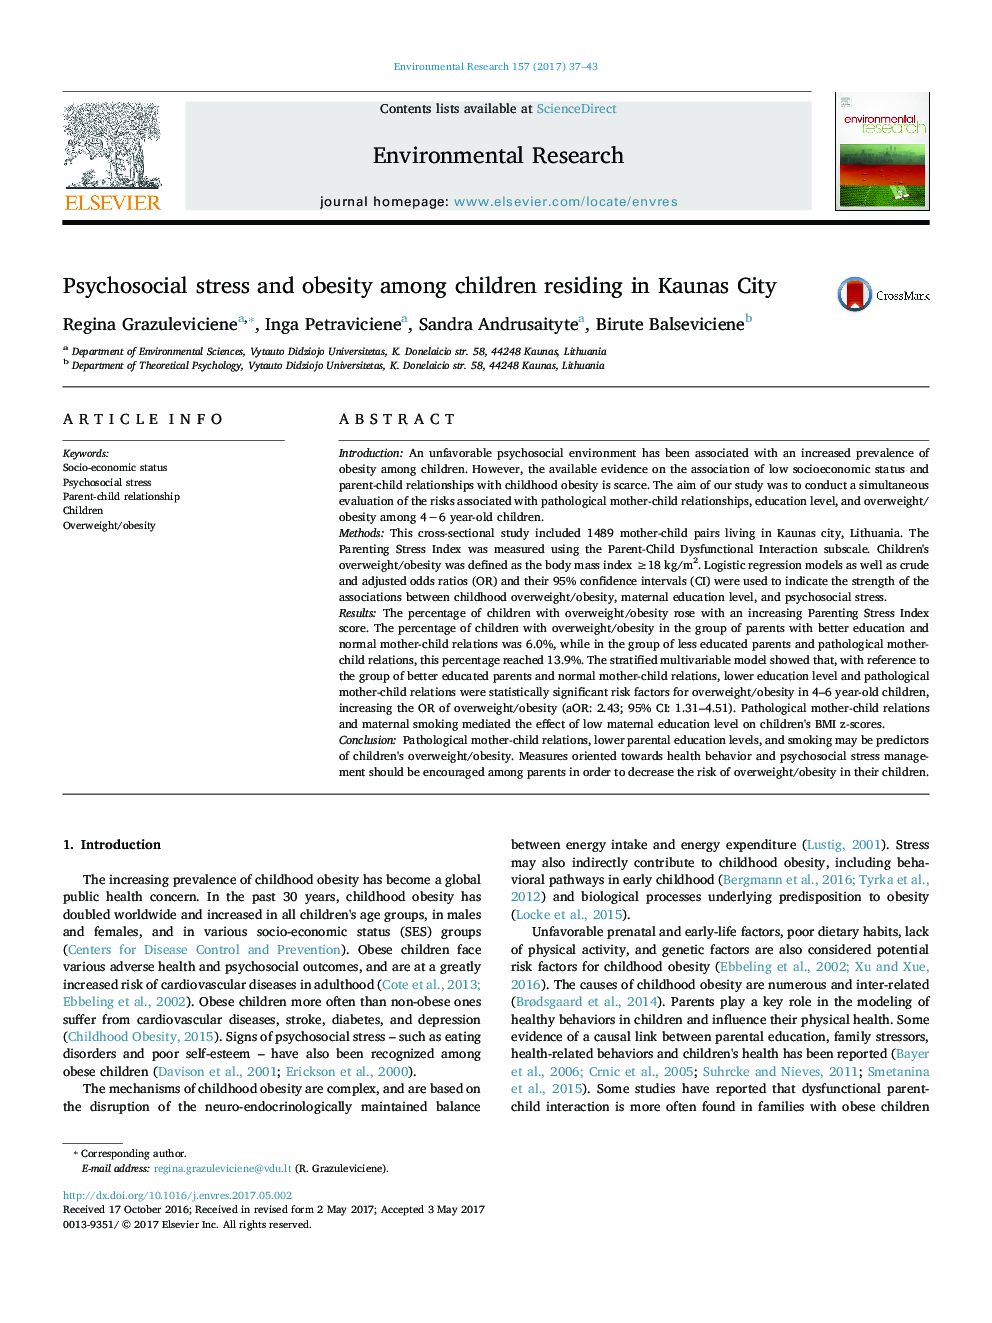 Psychosocial stress and obesity among children residing in Kaunas City